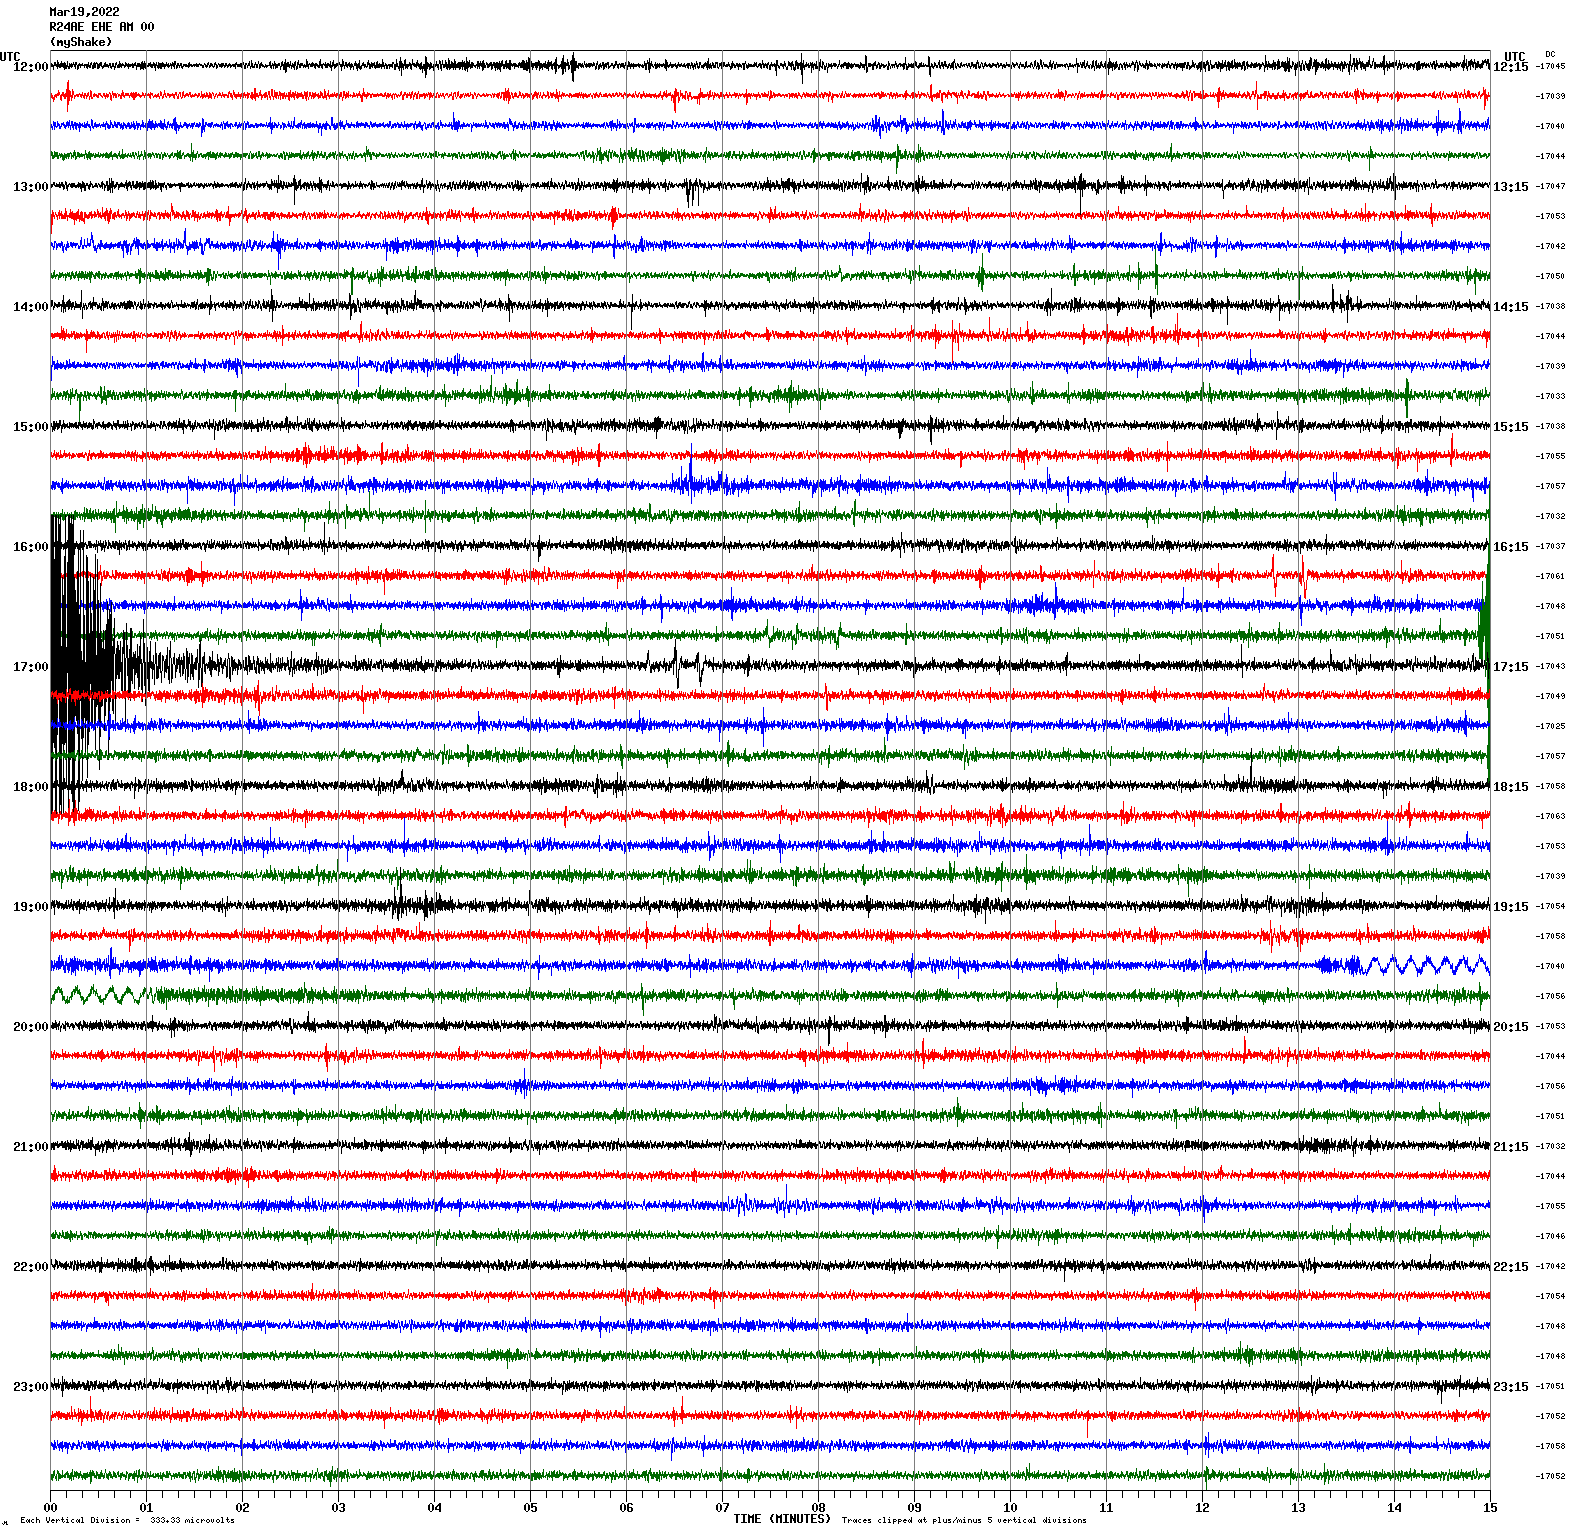 /seismic-data/R24AE/R24AE_EHE_AM_00.2022031912.gif